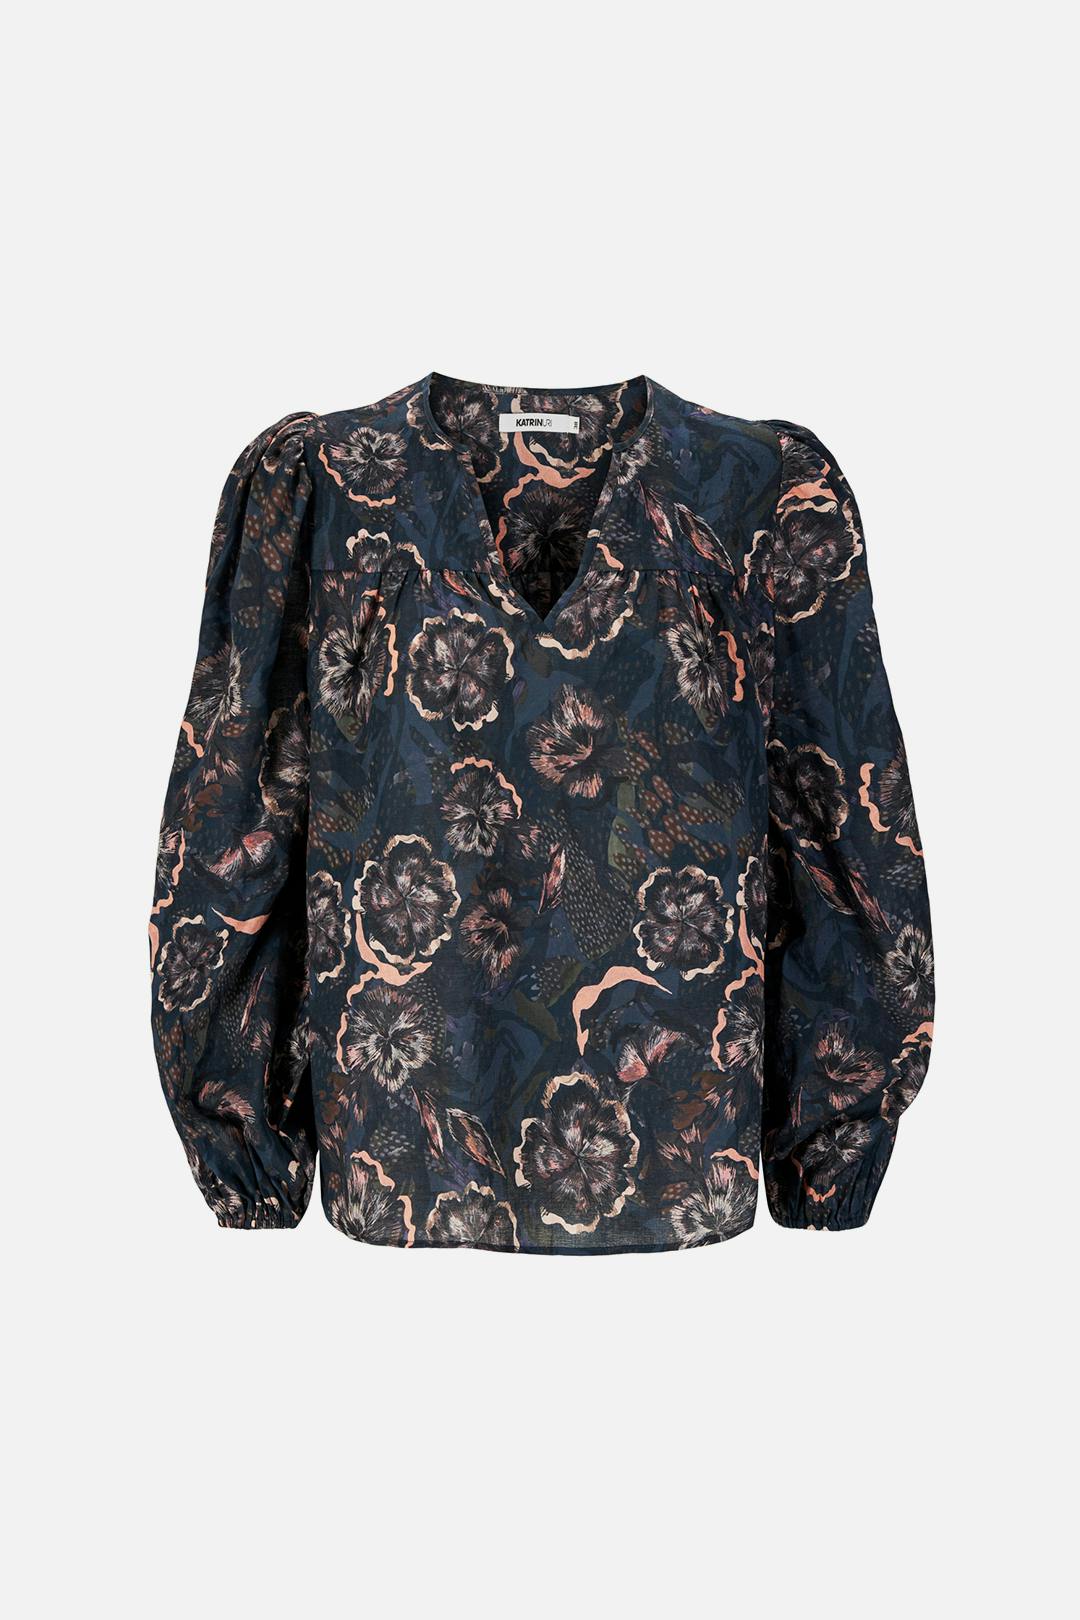 Høstrose indie blouse